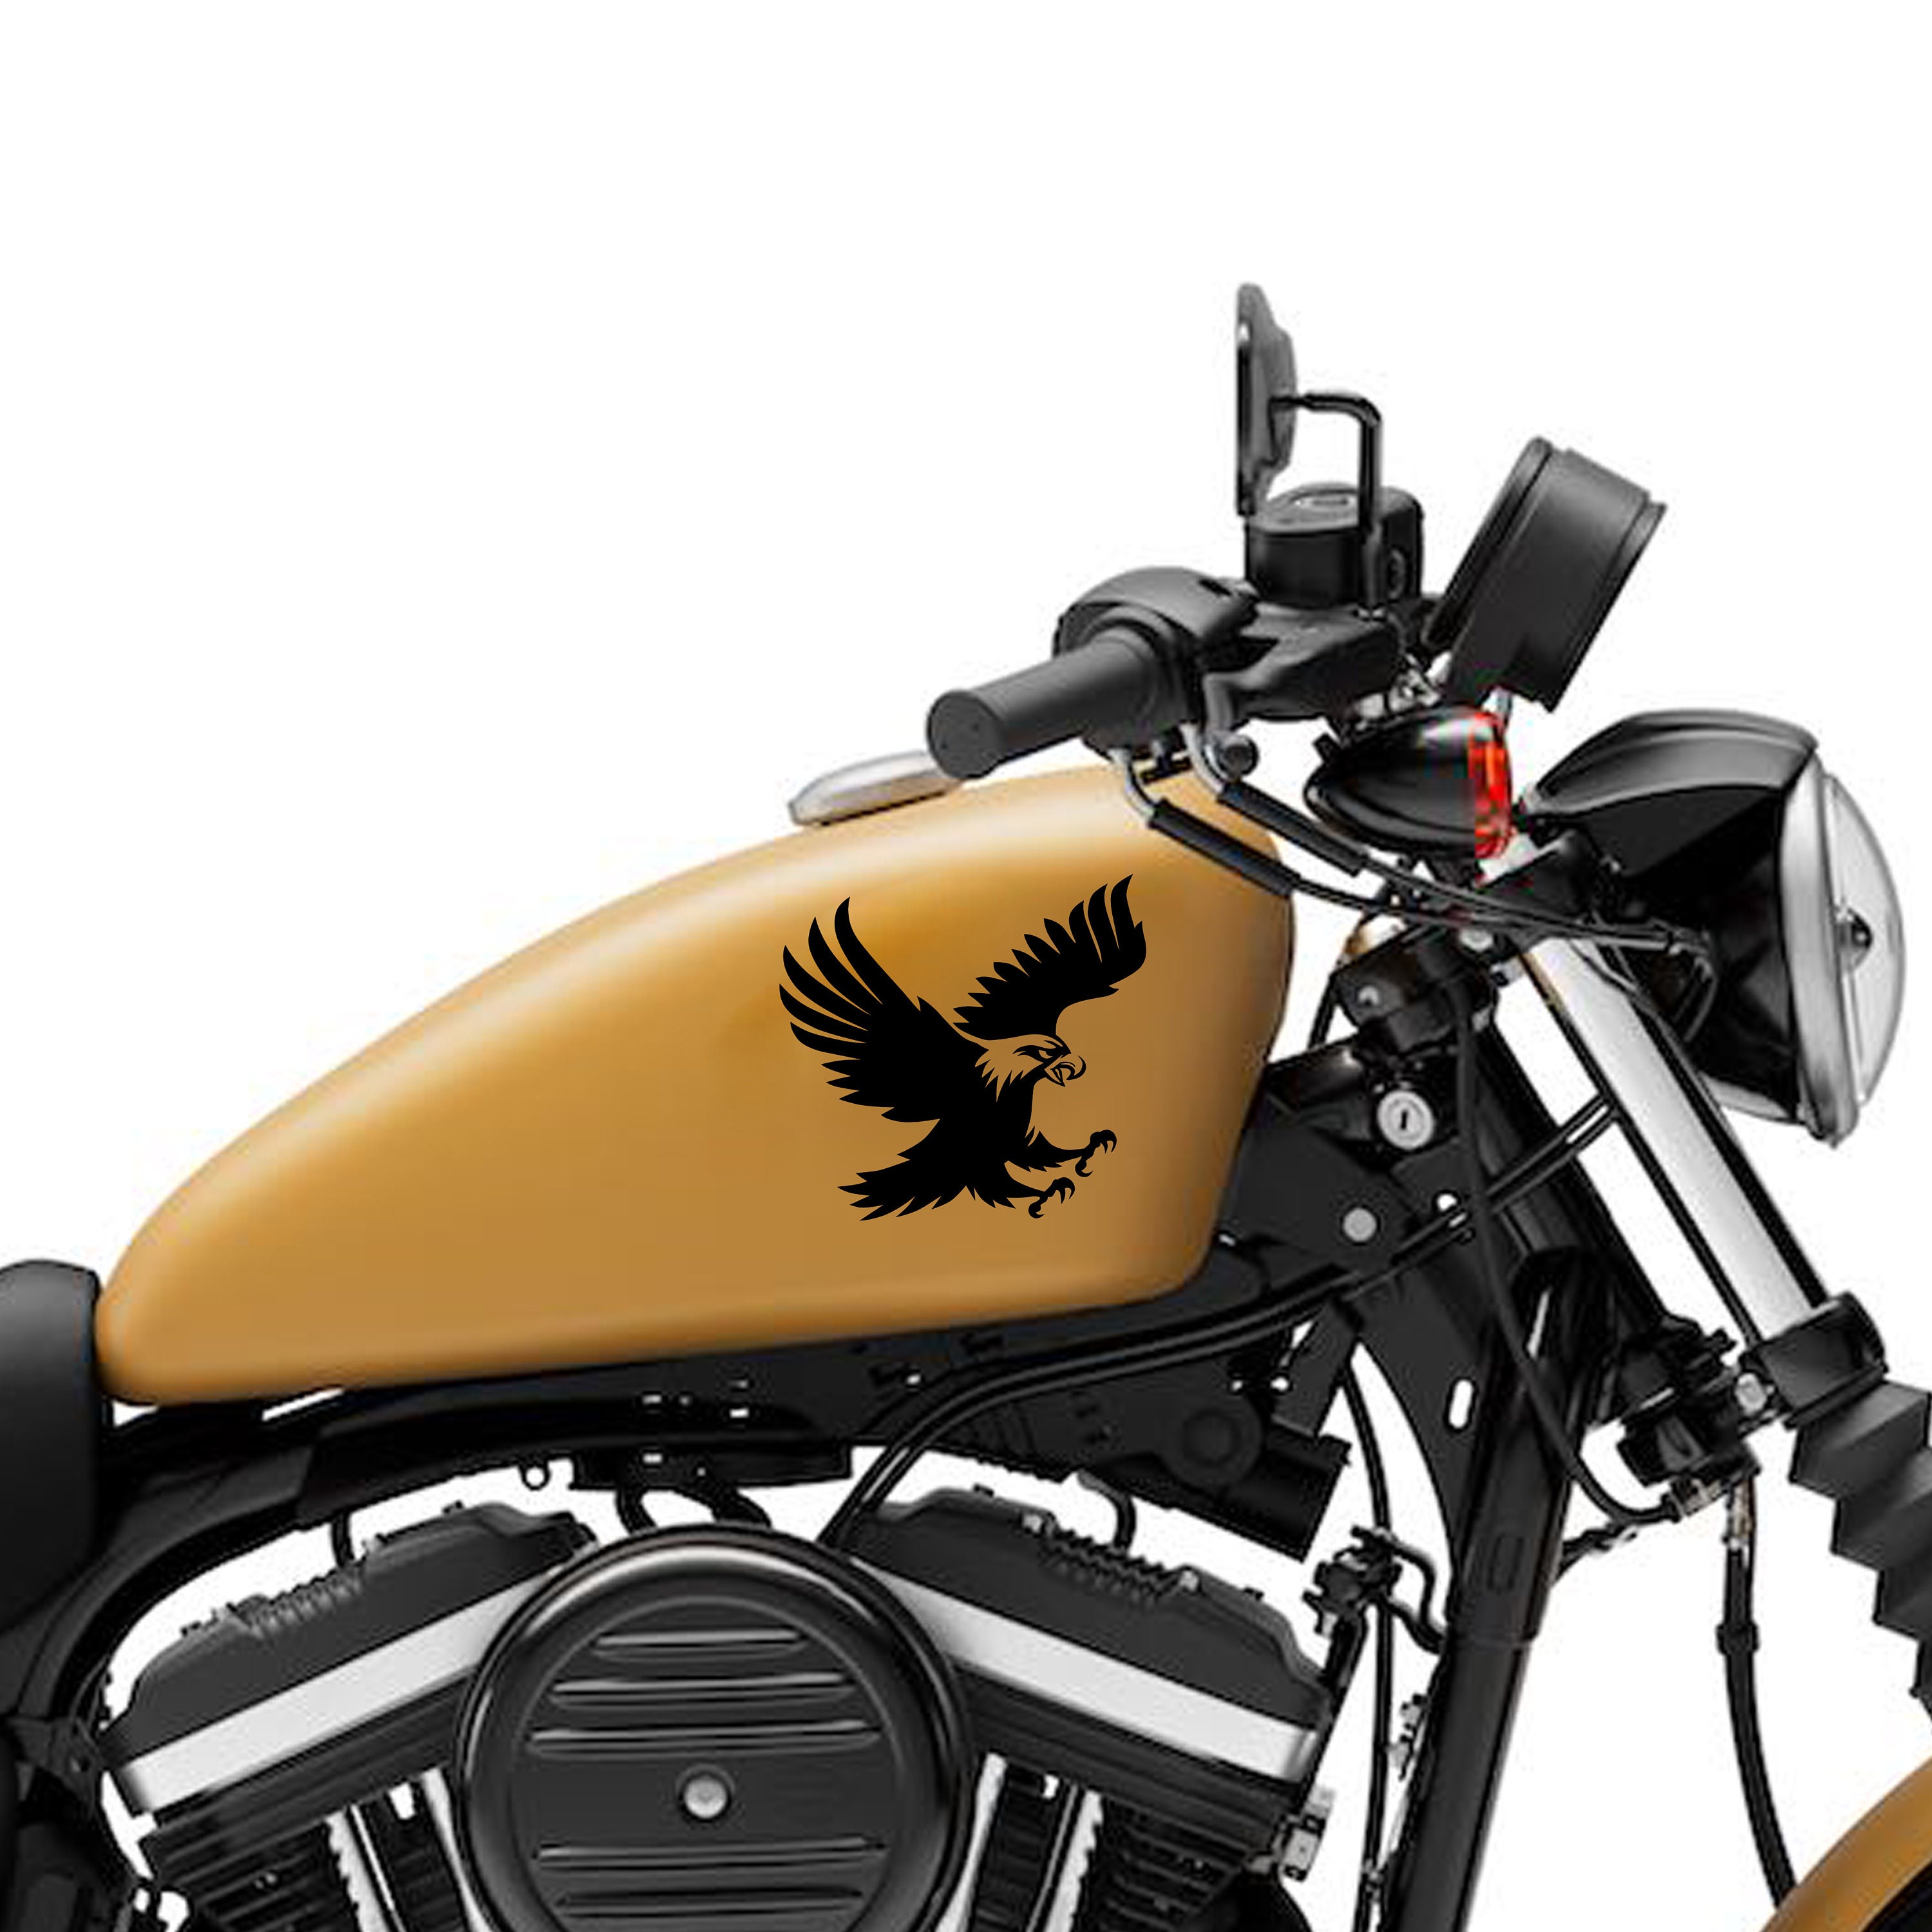 Motorrad Aufkleber Gas Tank Aufkleber / Skin eagle Vinyl Fahrrad Aufkleber  2 Stück ein Aufkleber für jede Seite. - .de